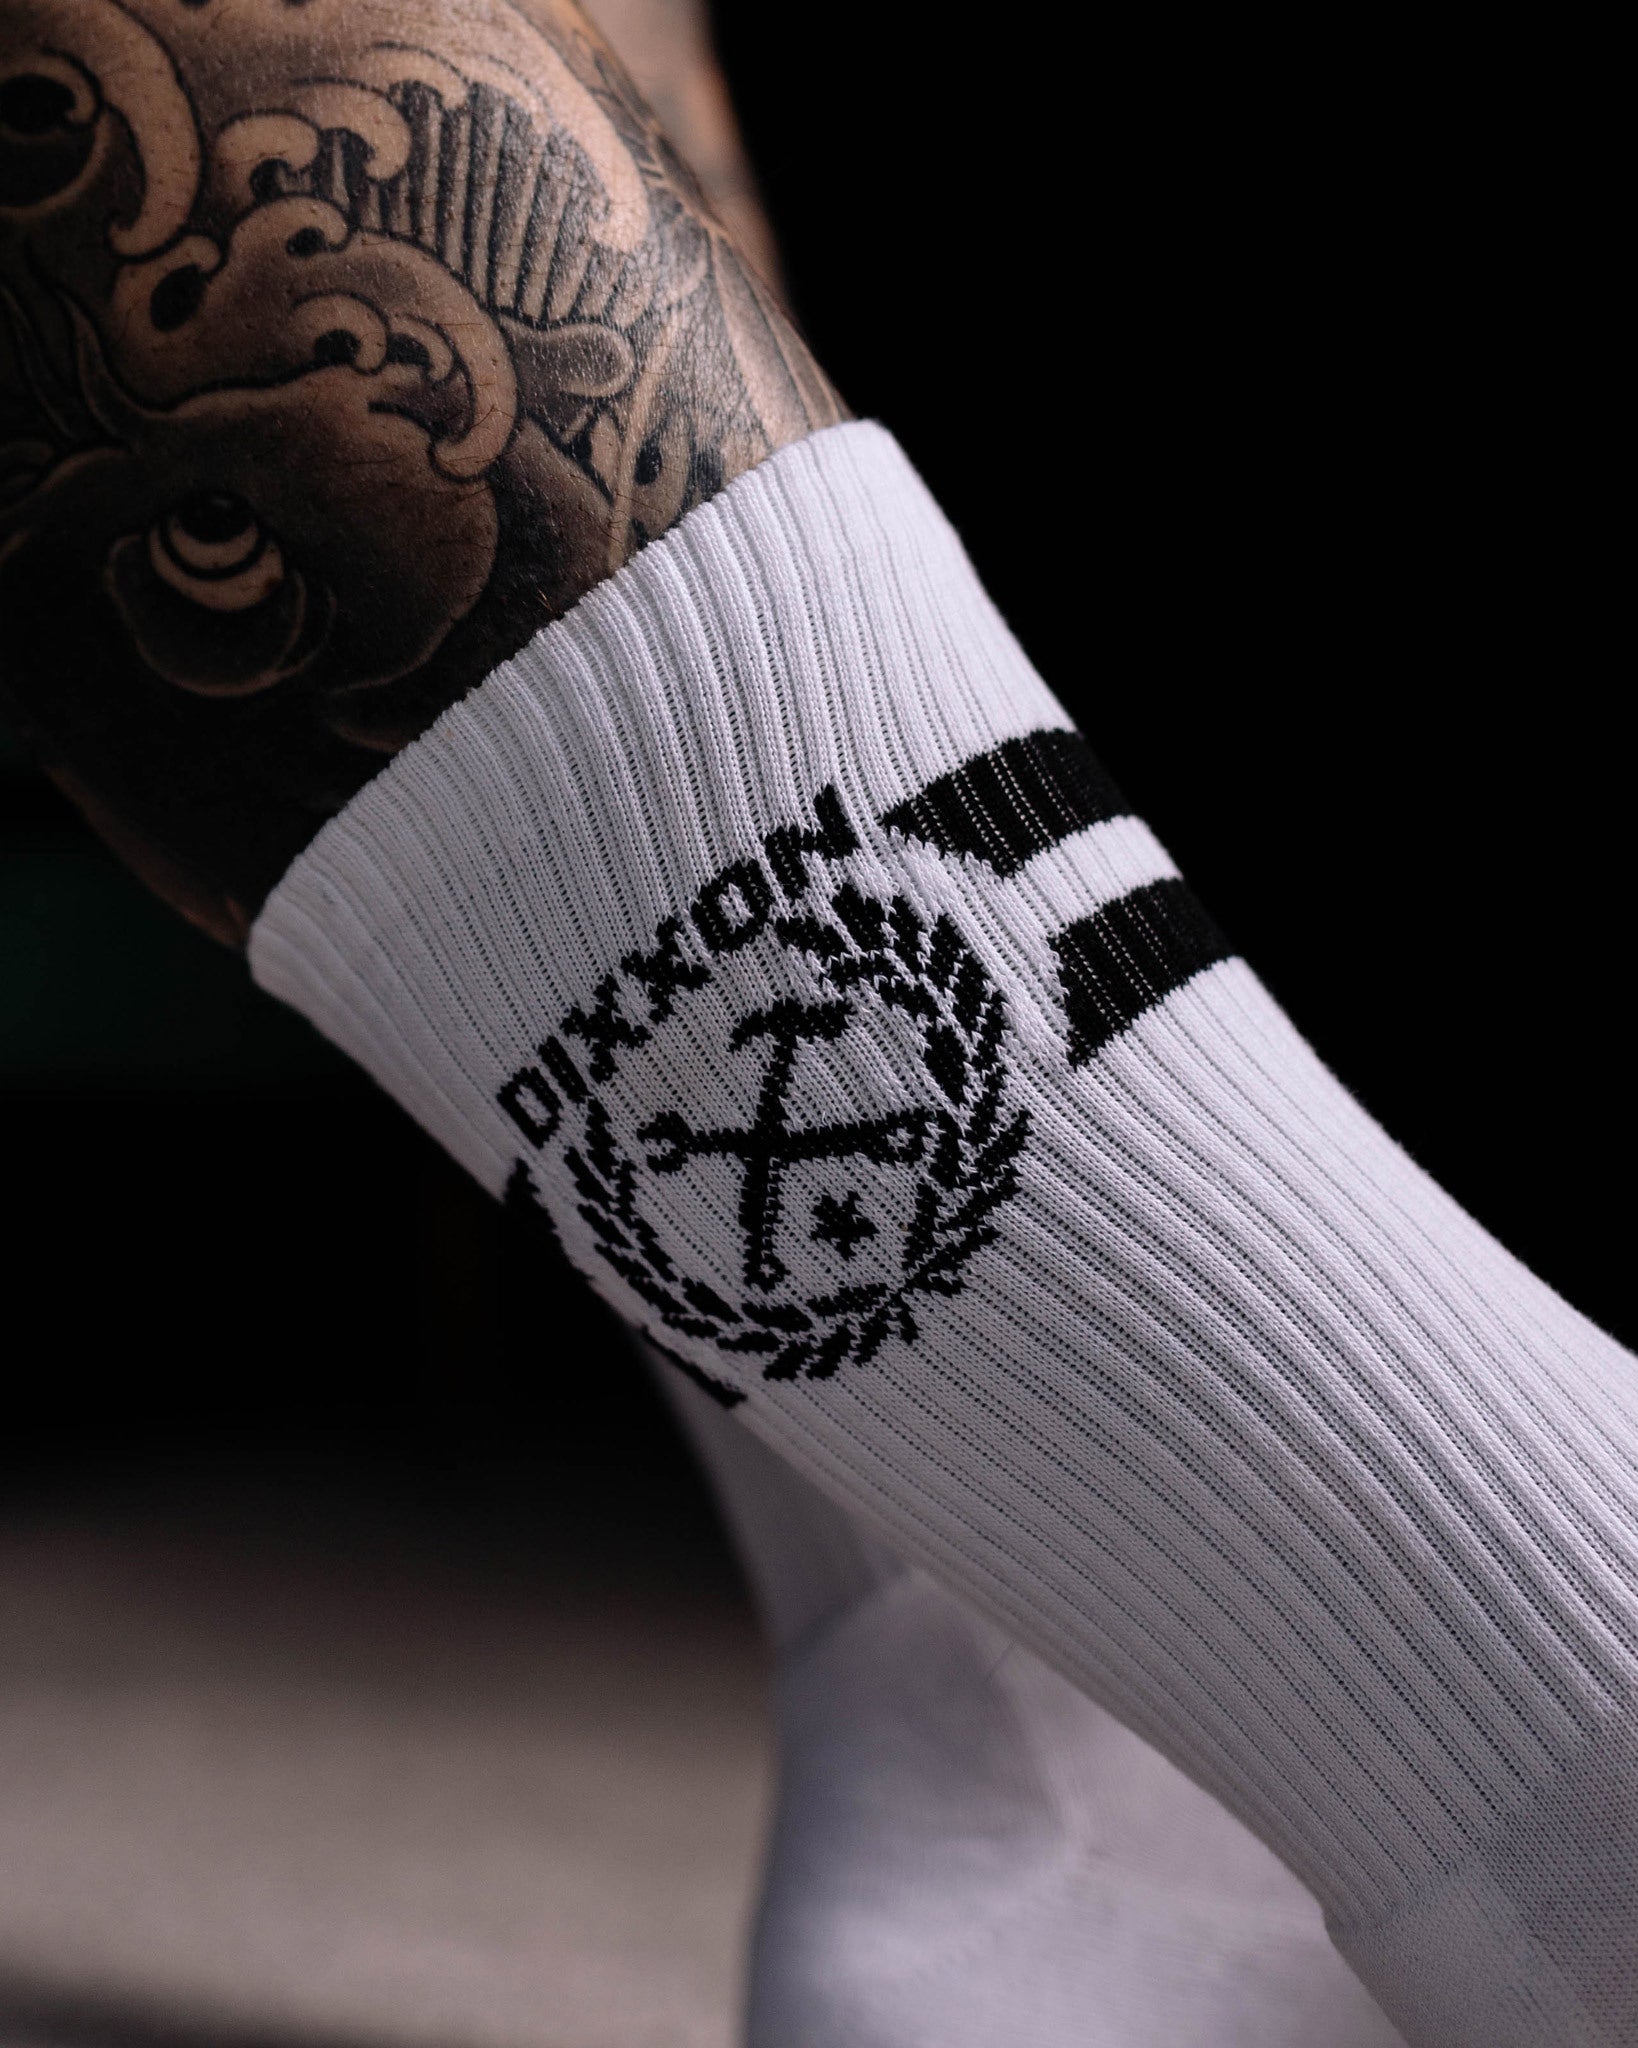 Dixxon Stay Humble Premium Crew Socks - White & Black